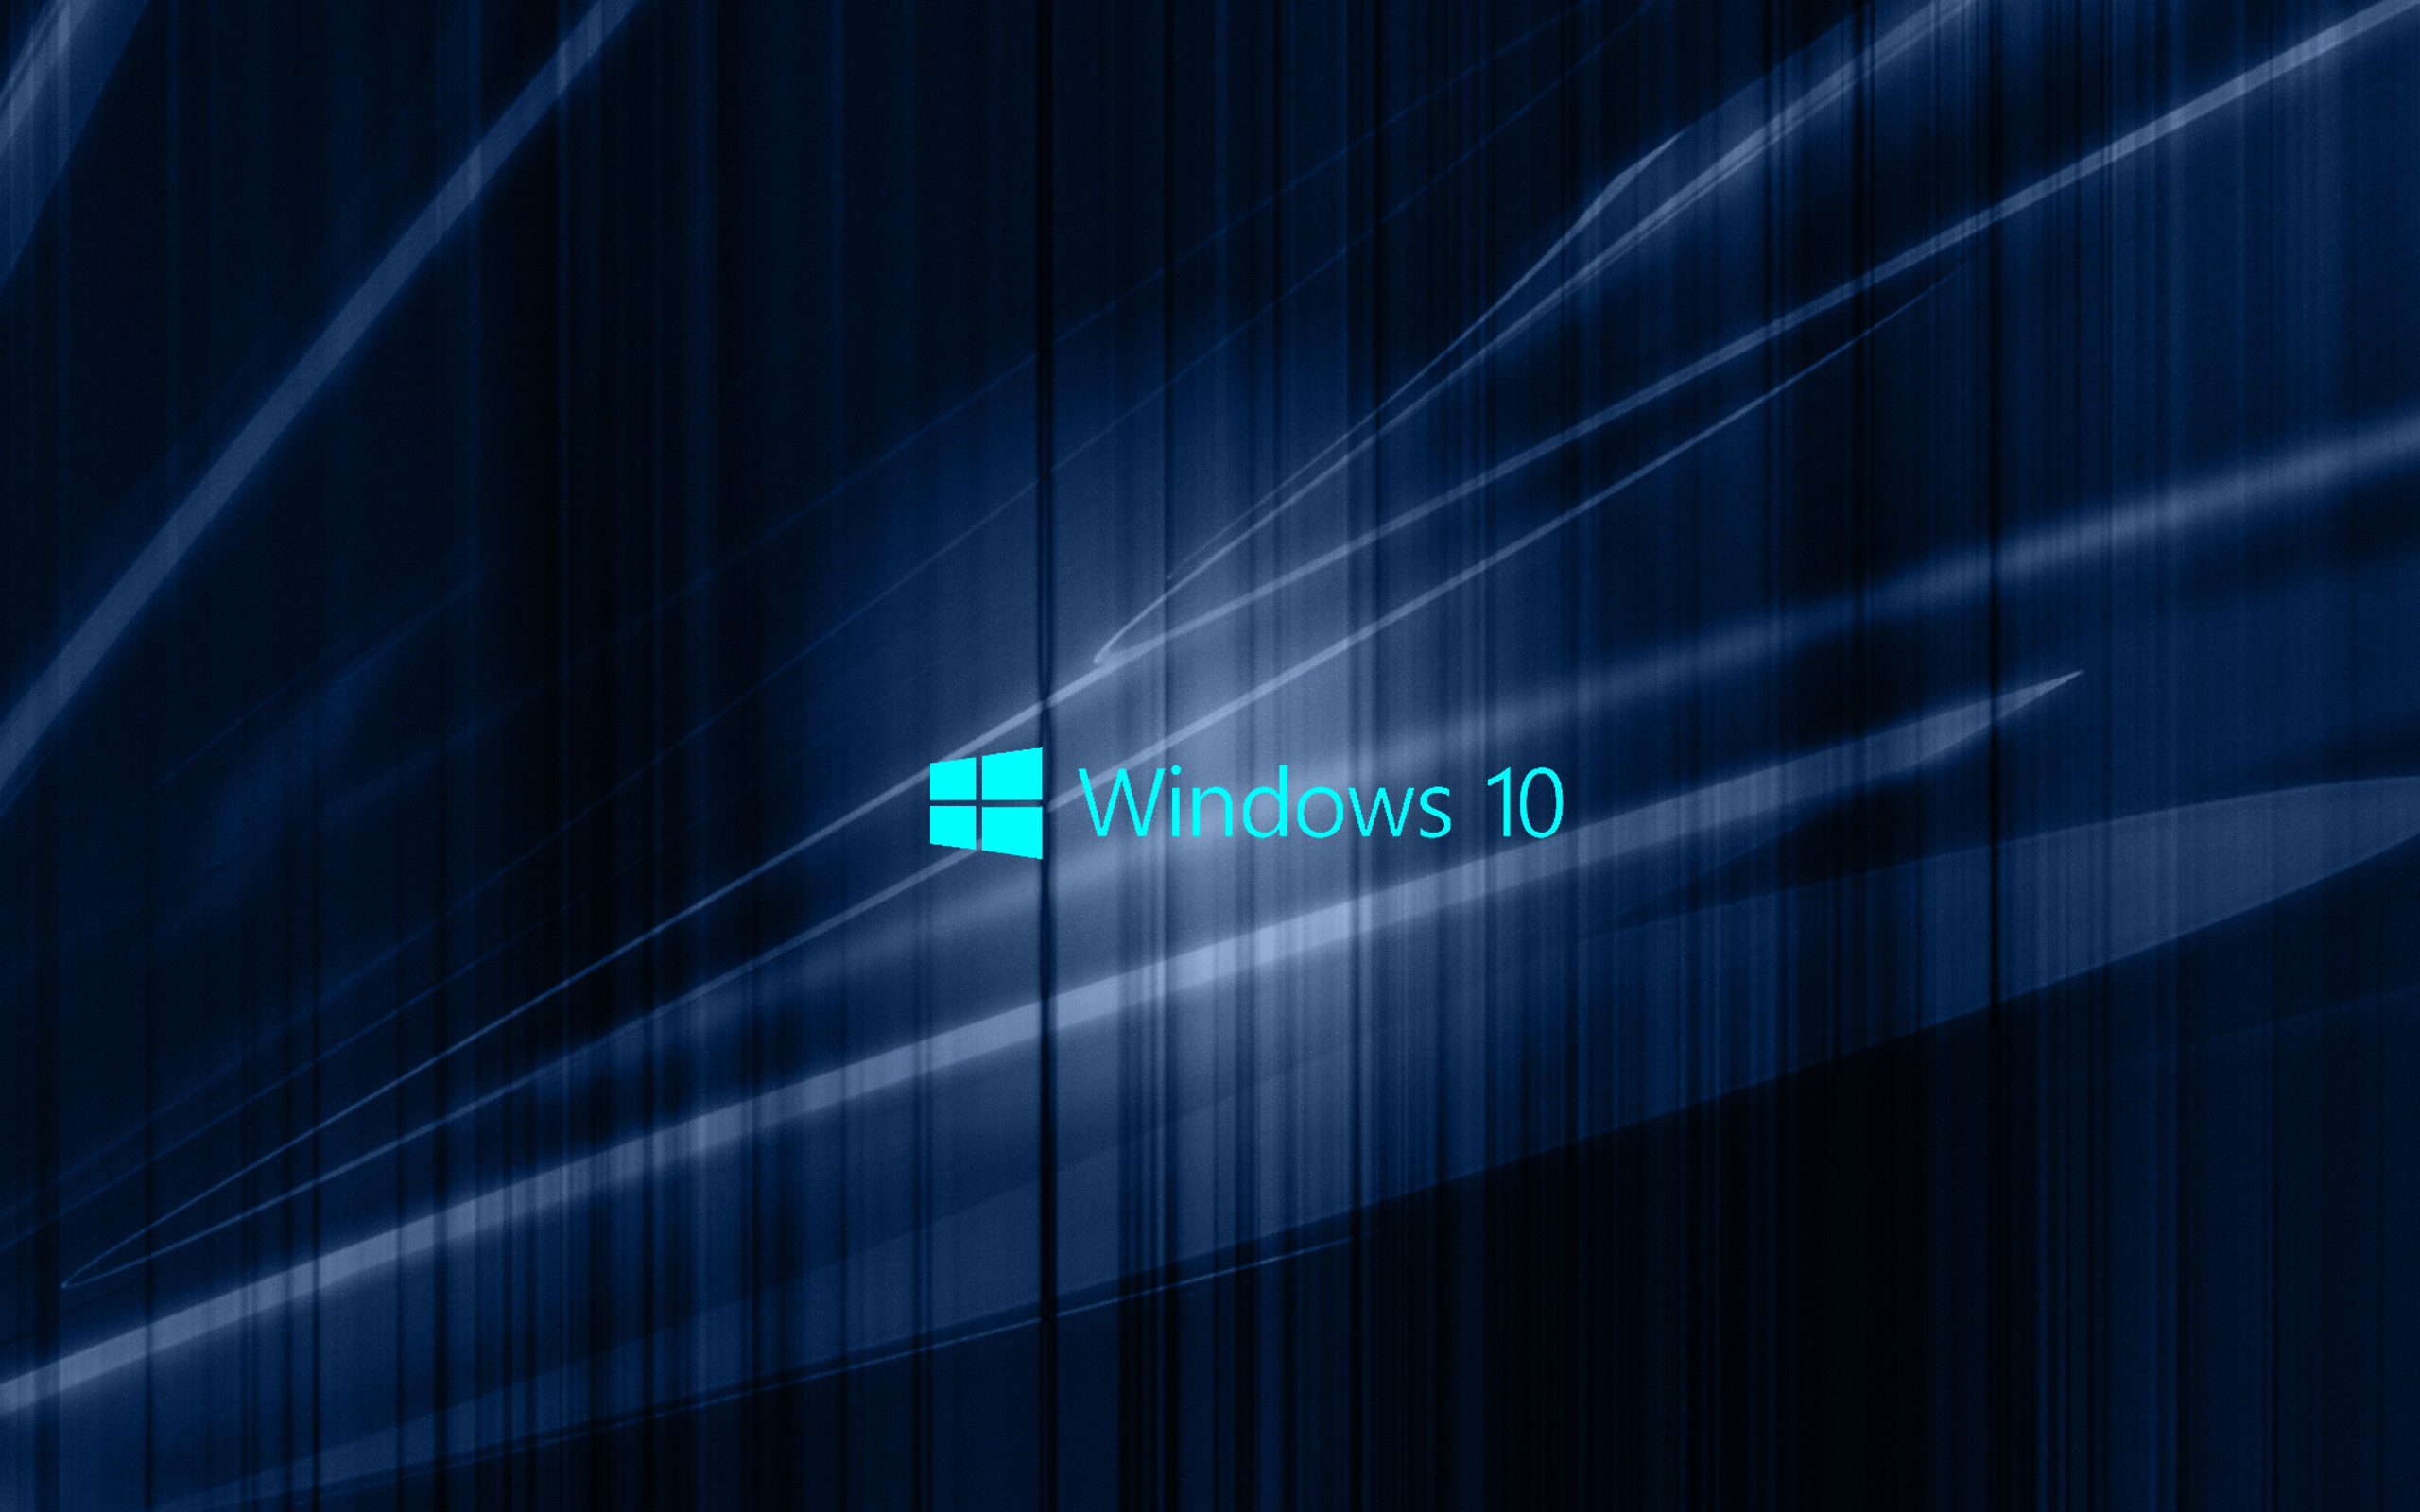 Windows Blue Hd Wallpapers Top Free Windows Blue Hd Backgrounds Wallpaperaccess